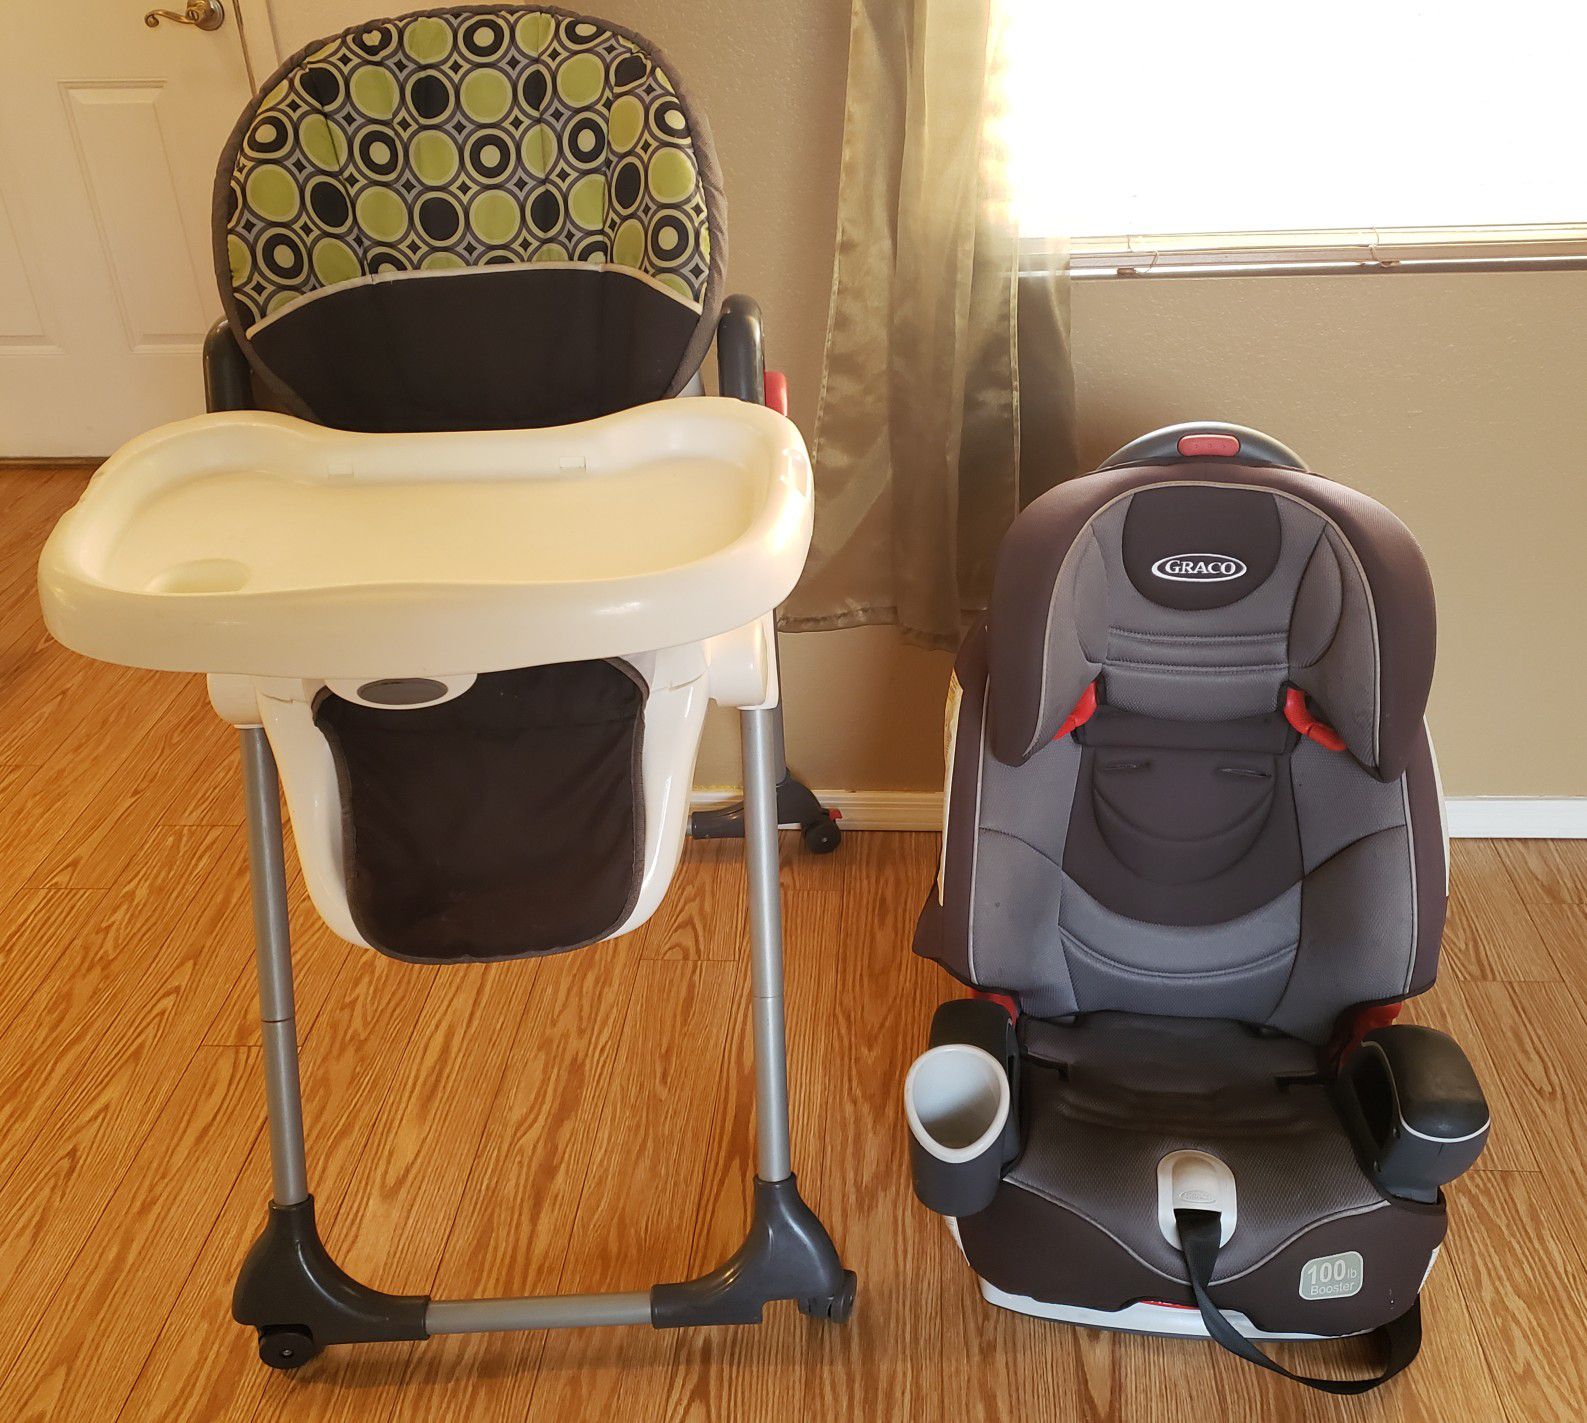 Toddler high chair & car seat booster bundle $20